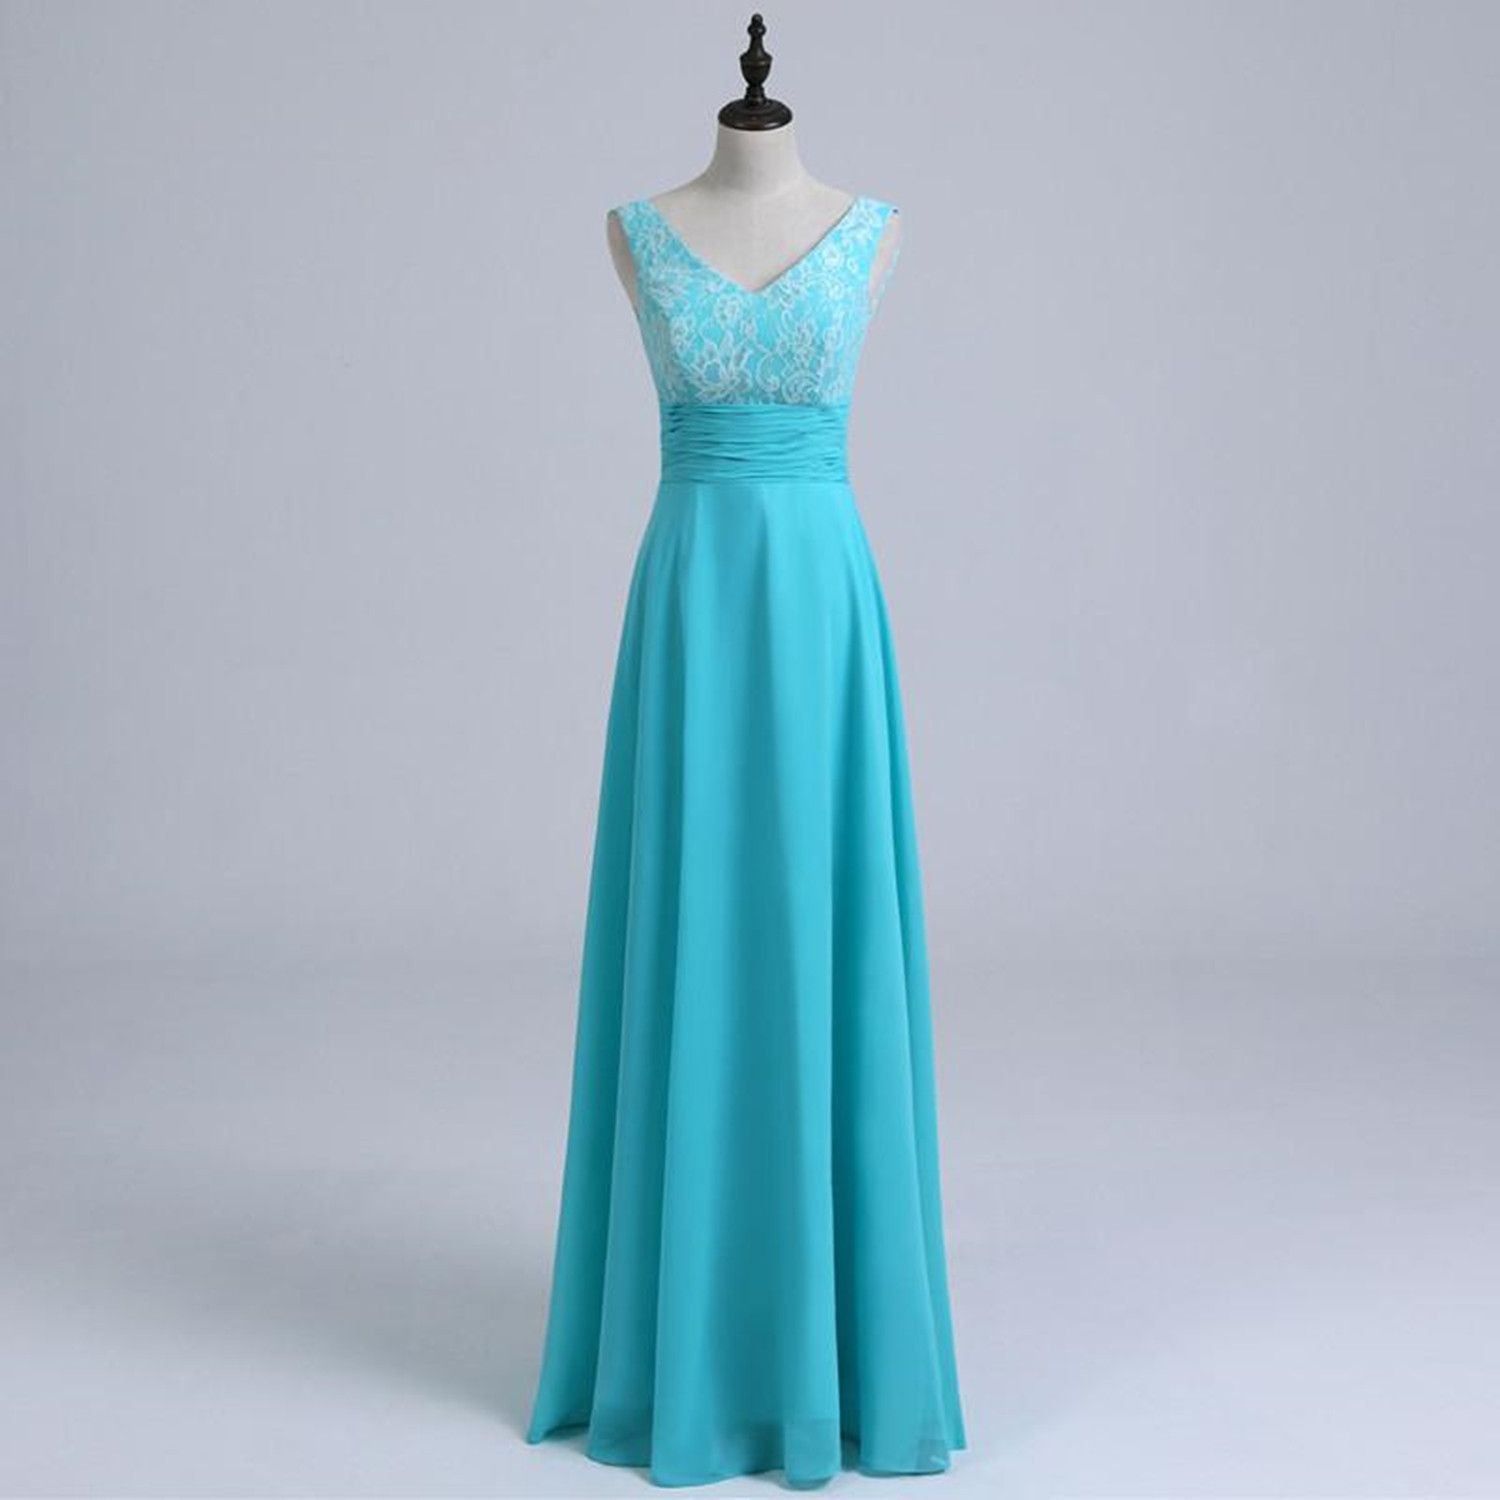 Turquoise Lace Chiffon Long Bridesmaid Dresses 2020 Wedding Party ...